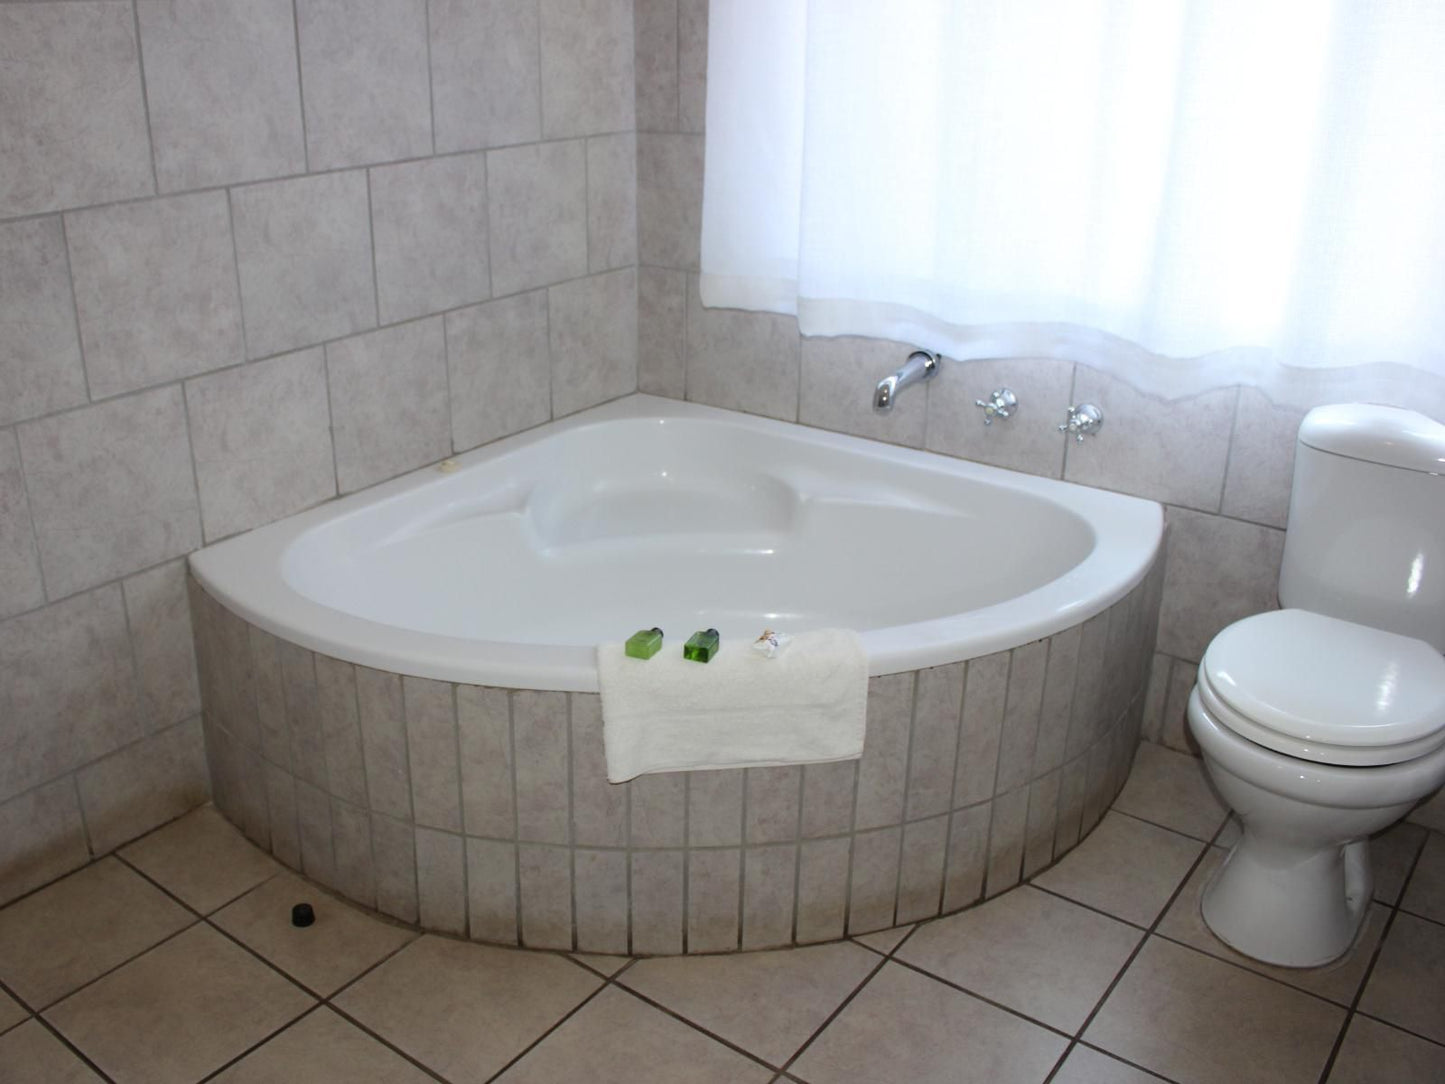 El Palmar Guest House Groblersdal Mpumalanga South Africa Bathroom